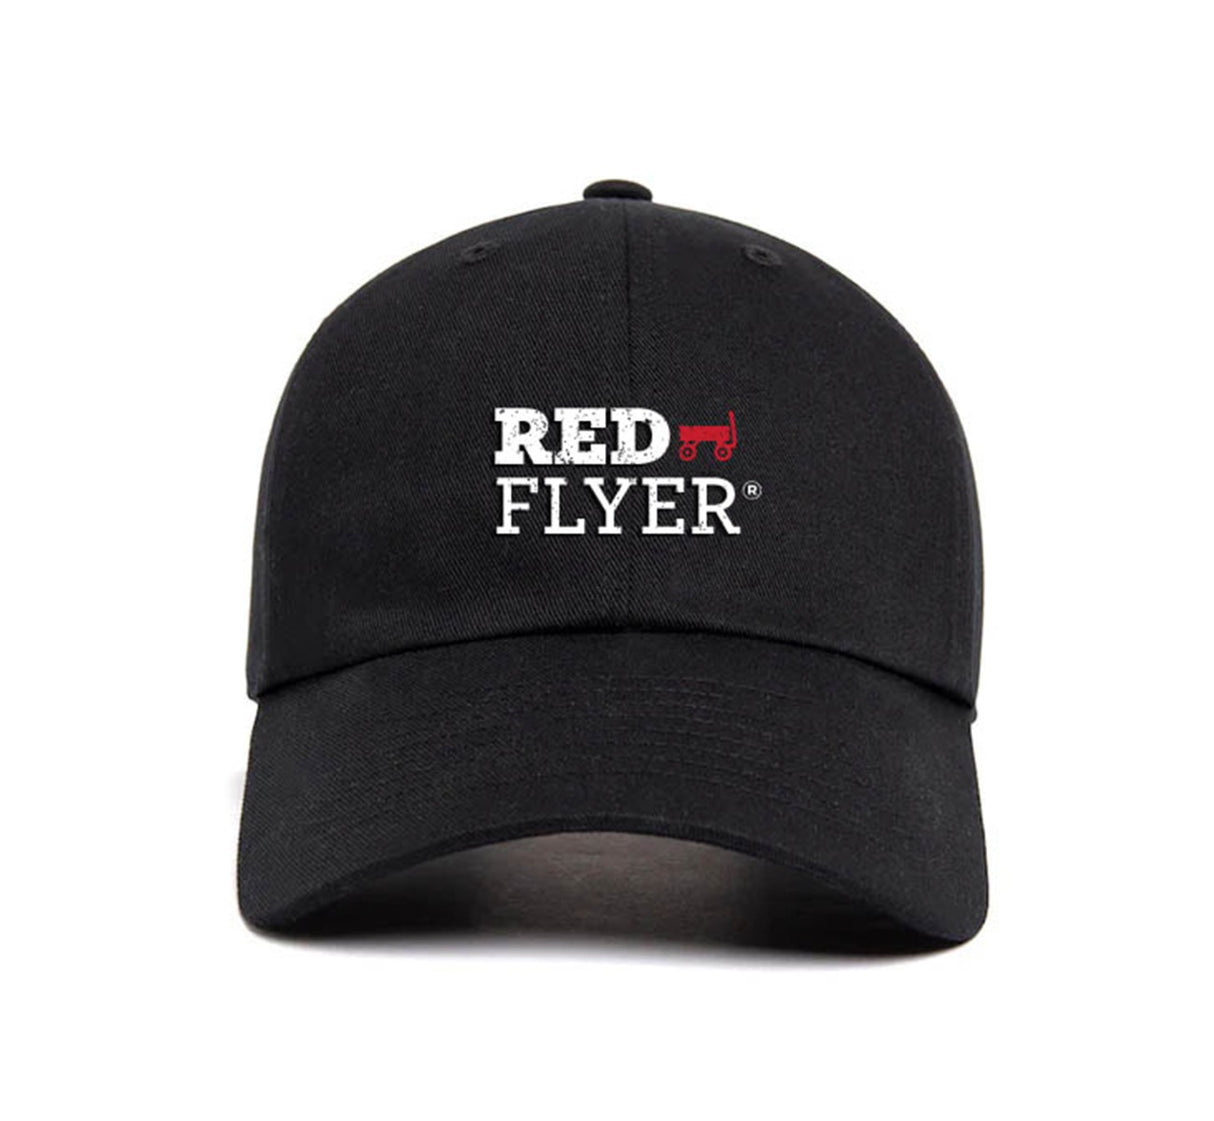 Red Flyer® Baseball Cap